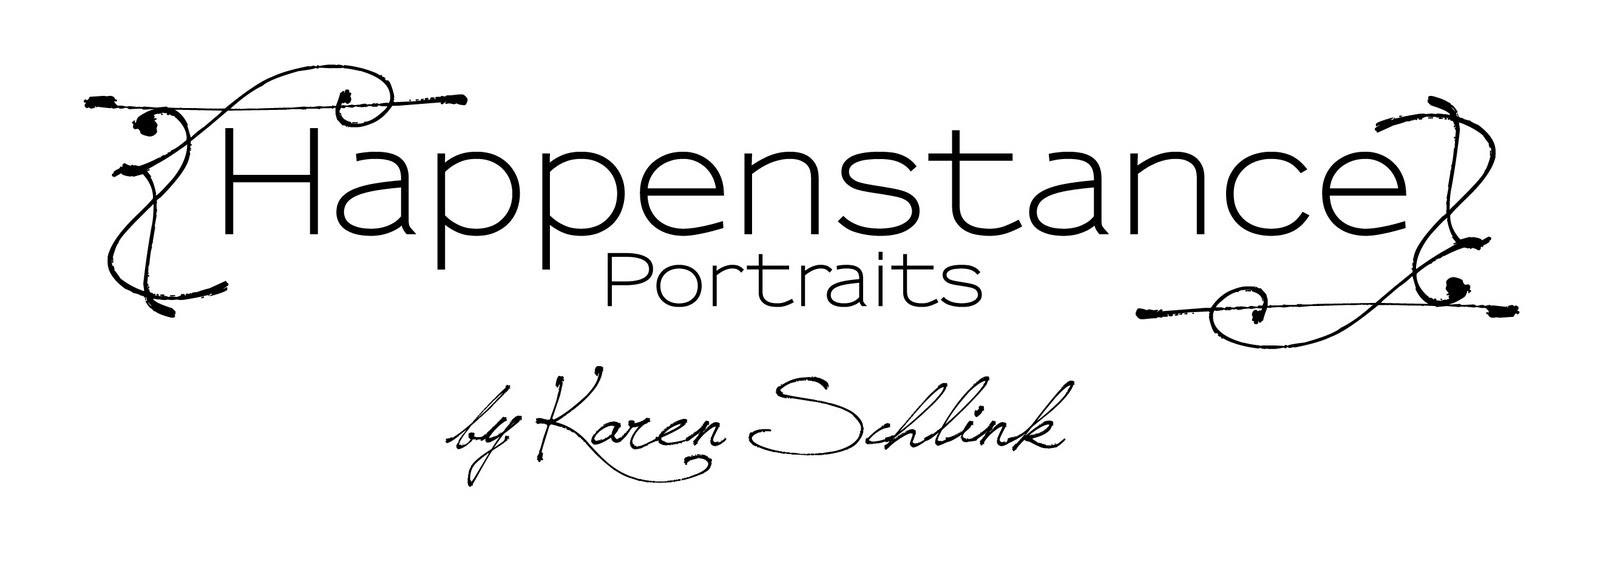 Happenstance Portraits by Karen Schlink